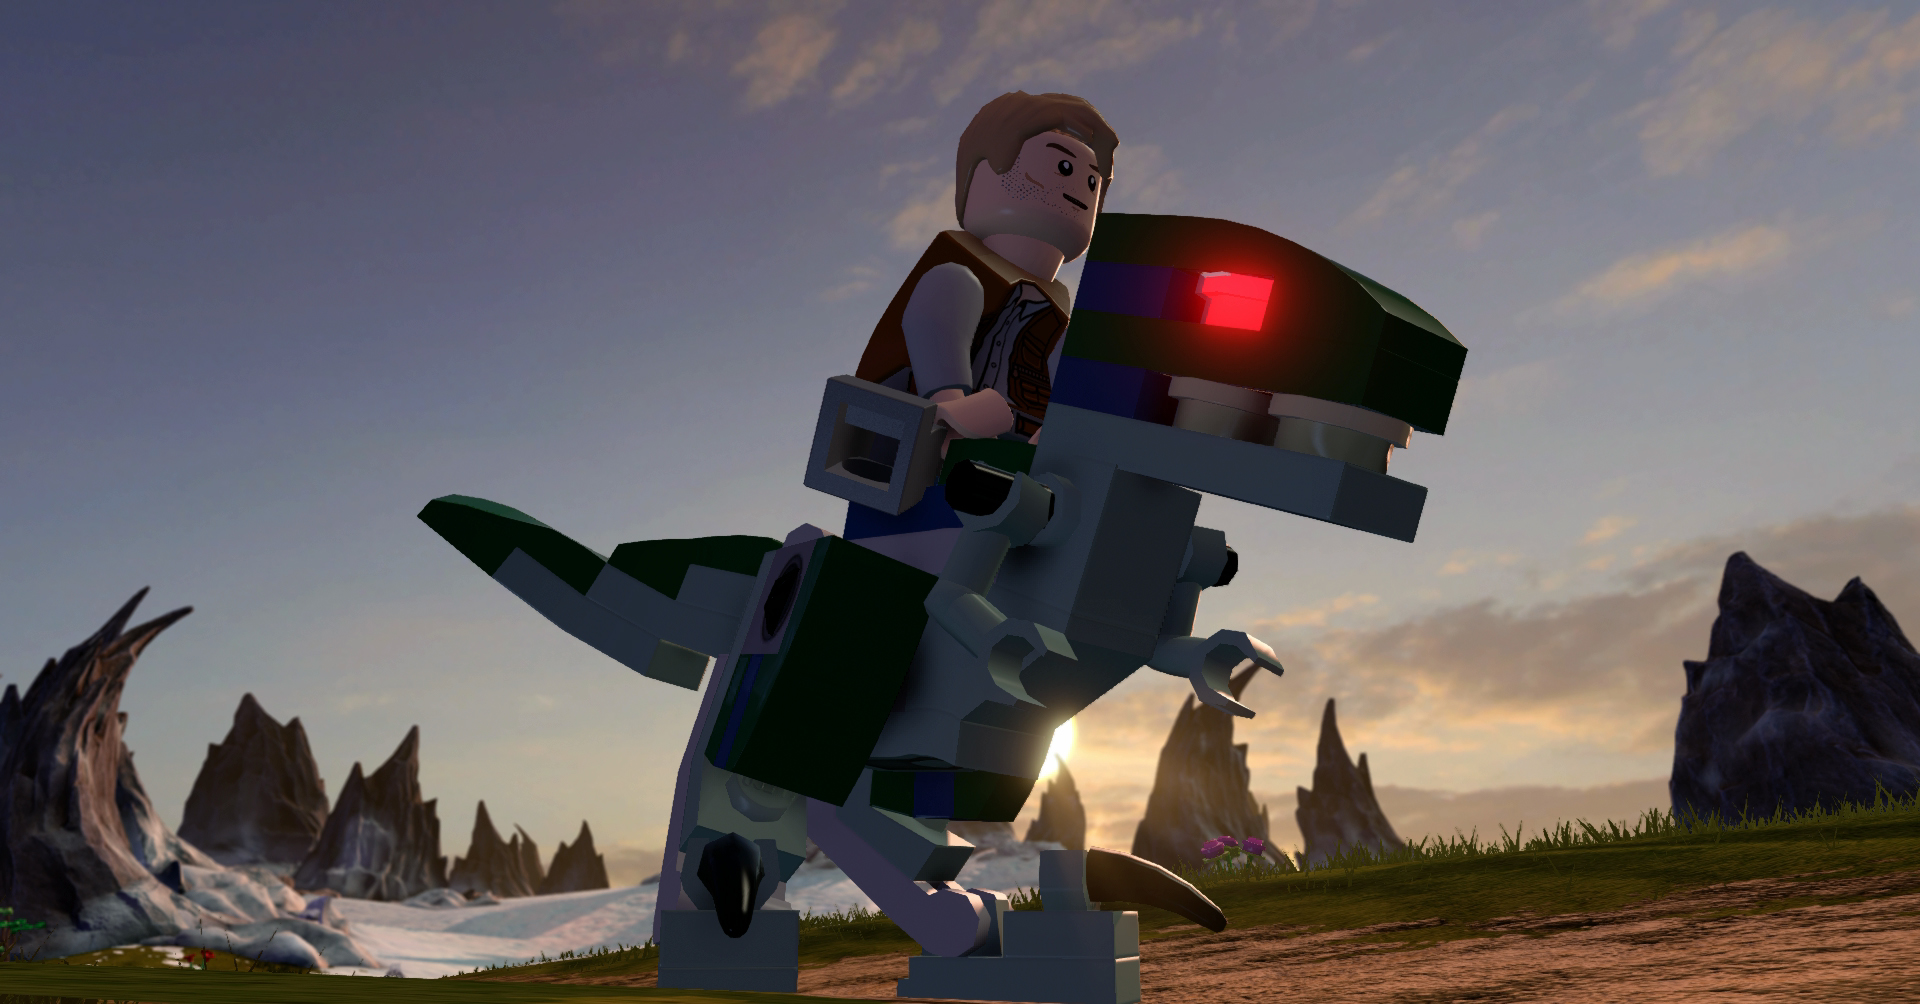 Jurassic World Raptor Riding in LEGO Dimensions